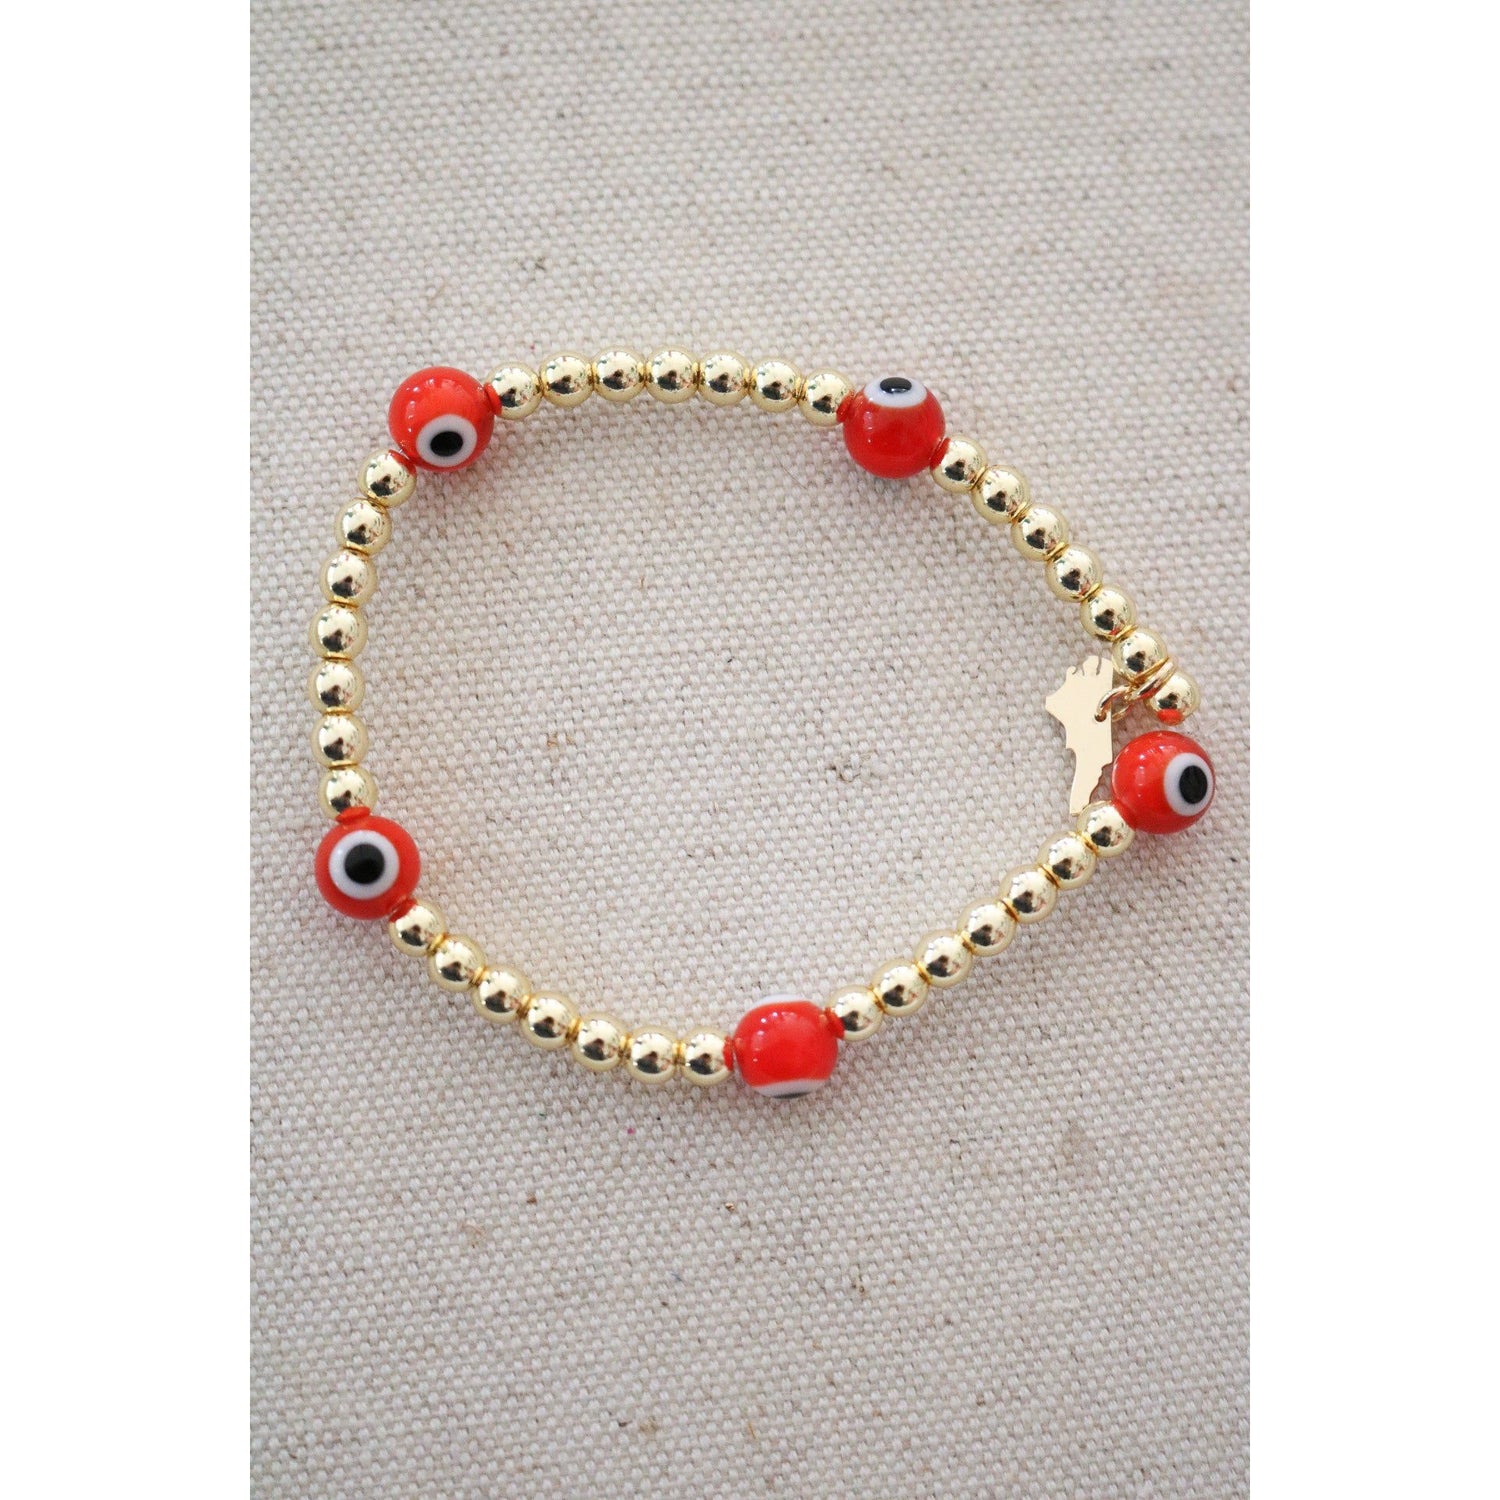 red and black evil eye beads on a gold hematite stretch bracelet